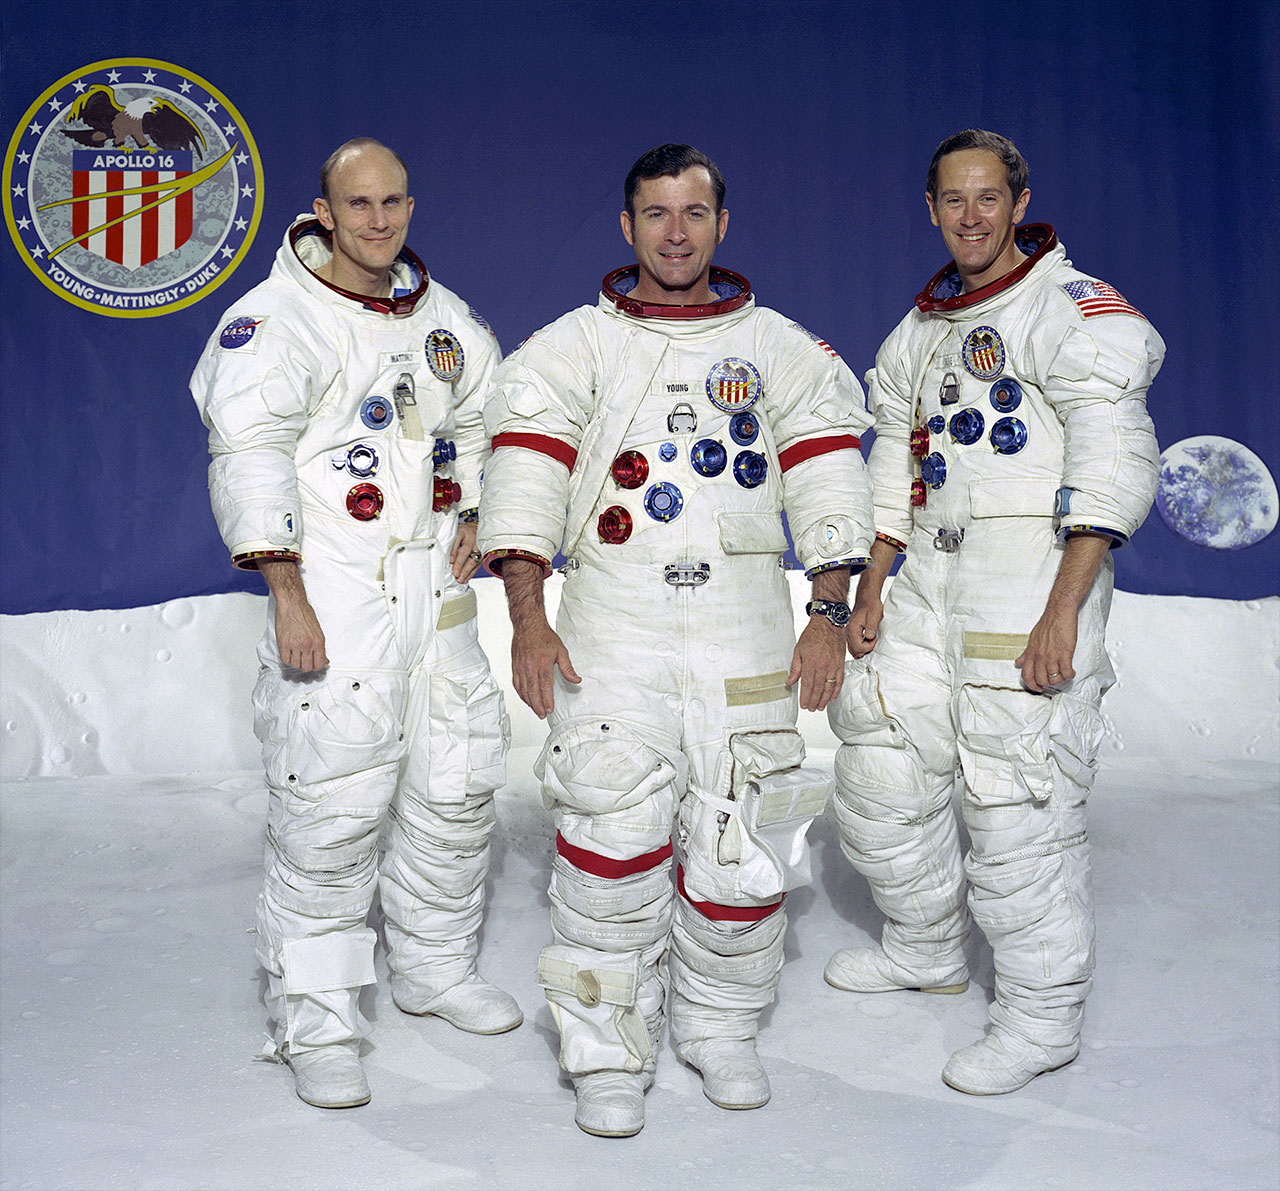 Apollo 16 crew portrait (from left): Thomas K. Mattingly II, command module pilot; John W. Young, mission commander; and Charles M. Duke Jr., lunar module pilot.